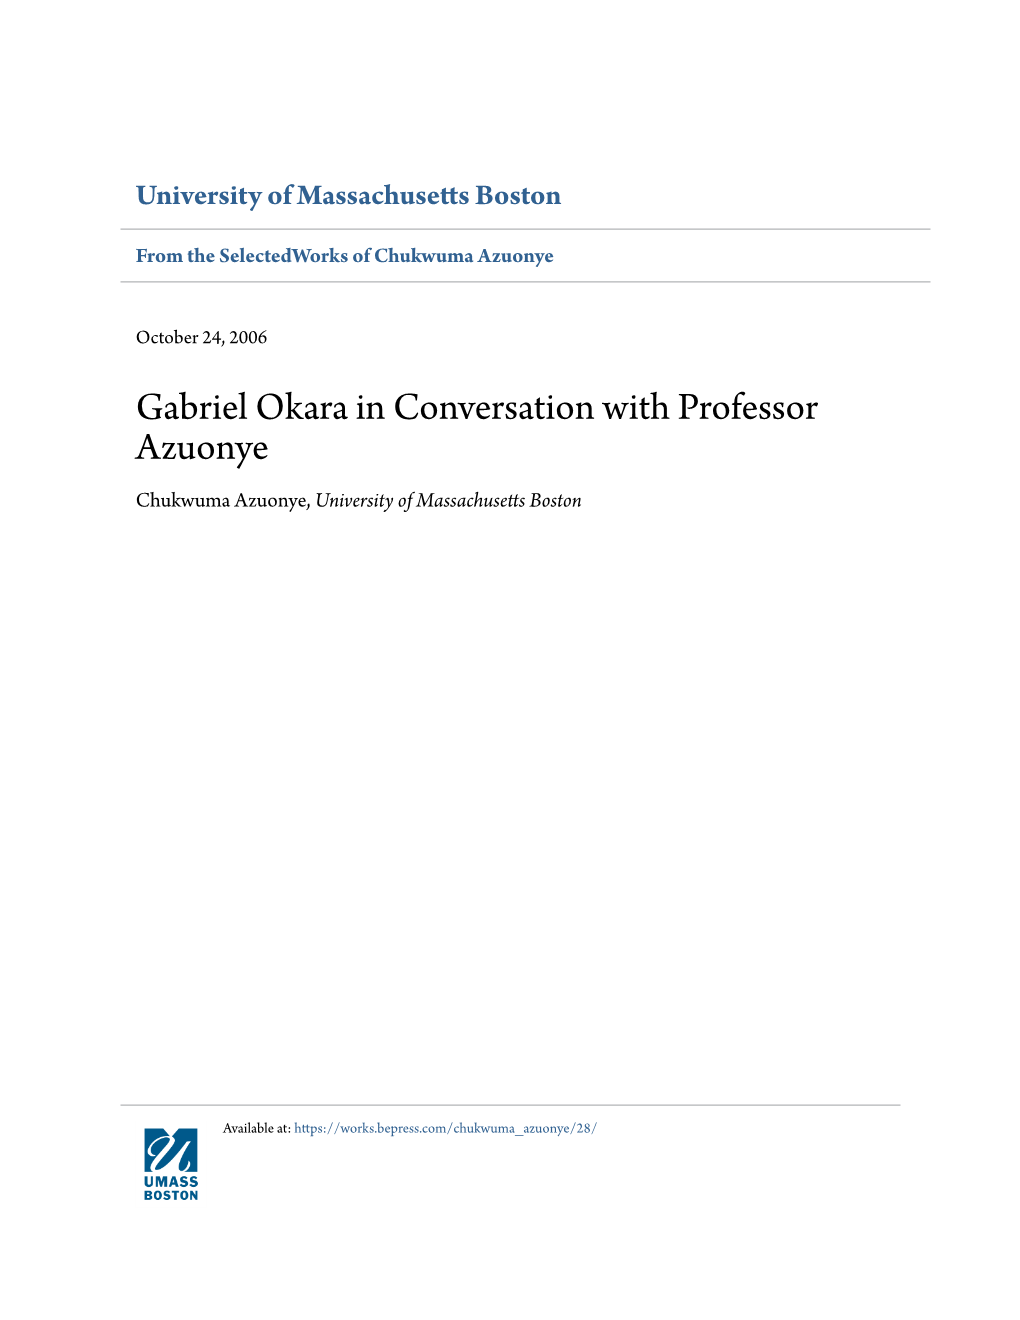 Gabriel Okara in Conversation with Professor Azuonye Chukwuma Azuonye, University of Massachusetts Boston